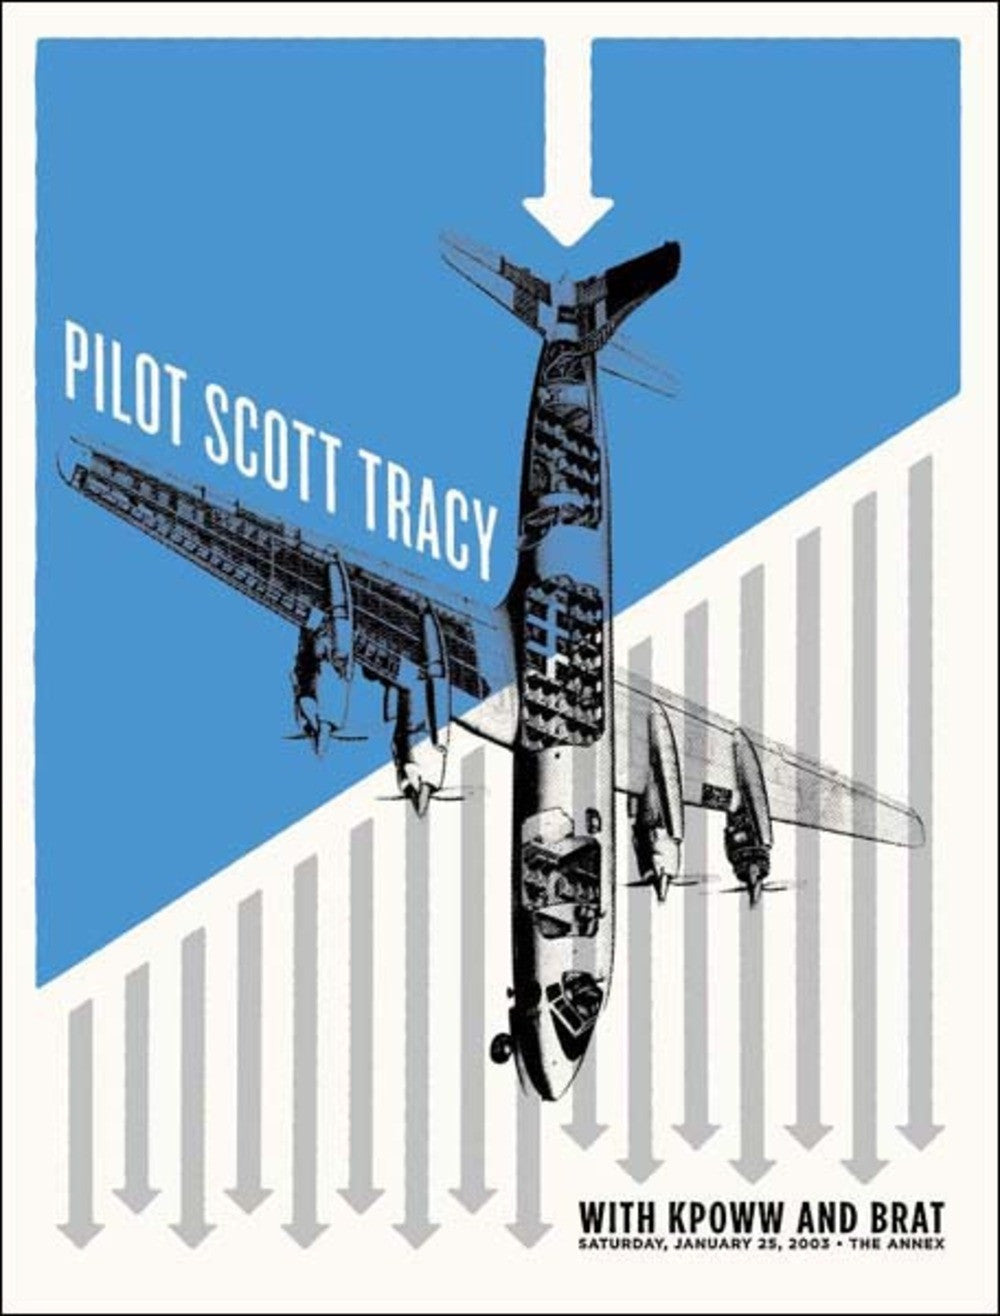 Aesthetic Apparatus - 2003 - Pilot Scott Tracy Concert Poster